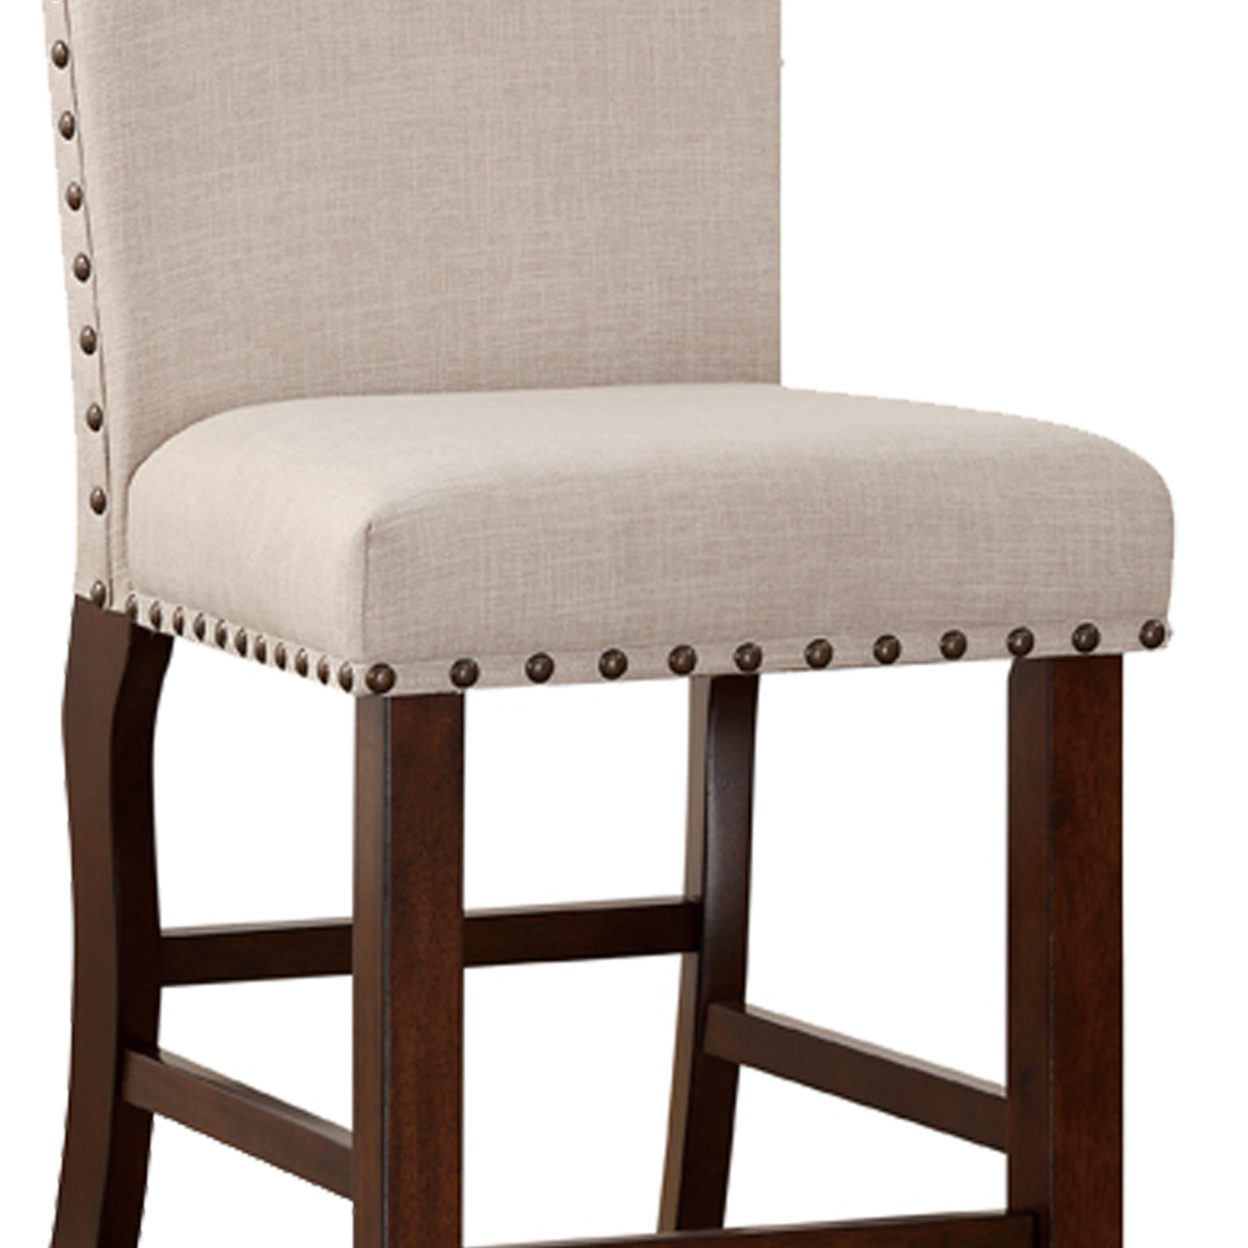 Rubber Wood High Chair With Studded Trim, Cream & Cherry Brown, Set Of 2- Saltoro Sherpi